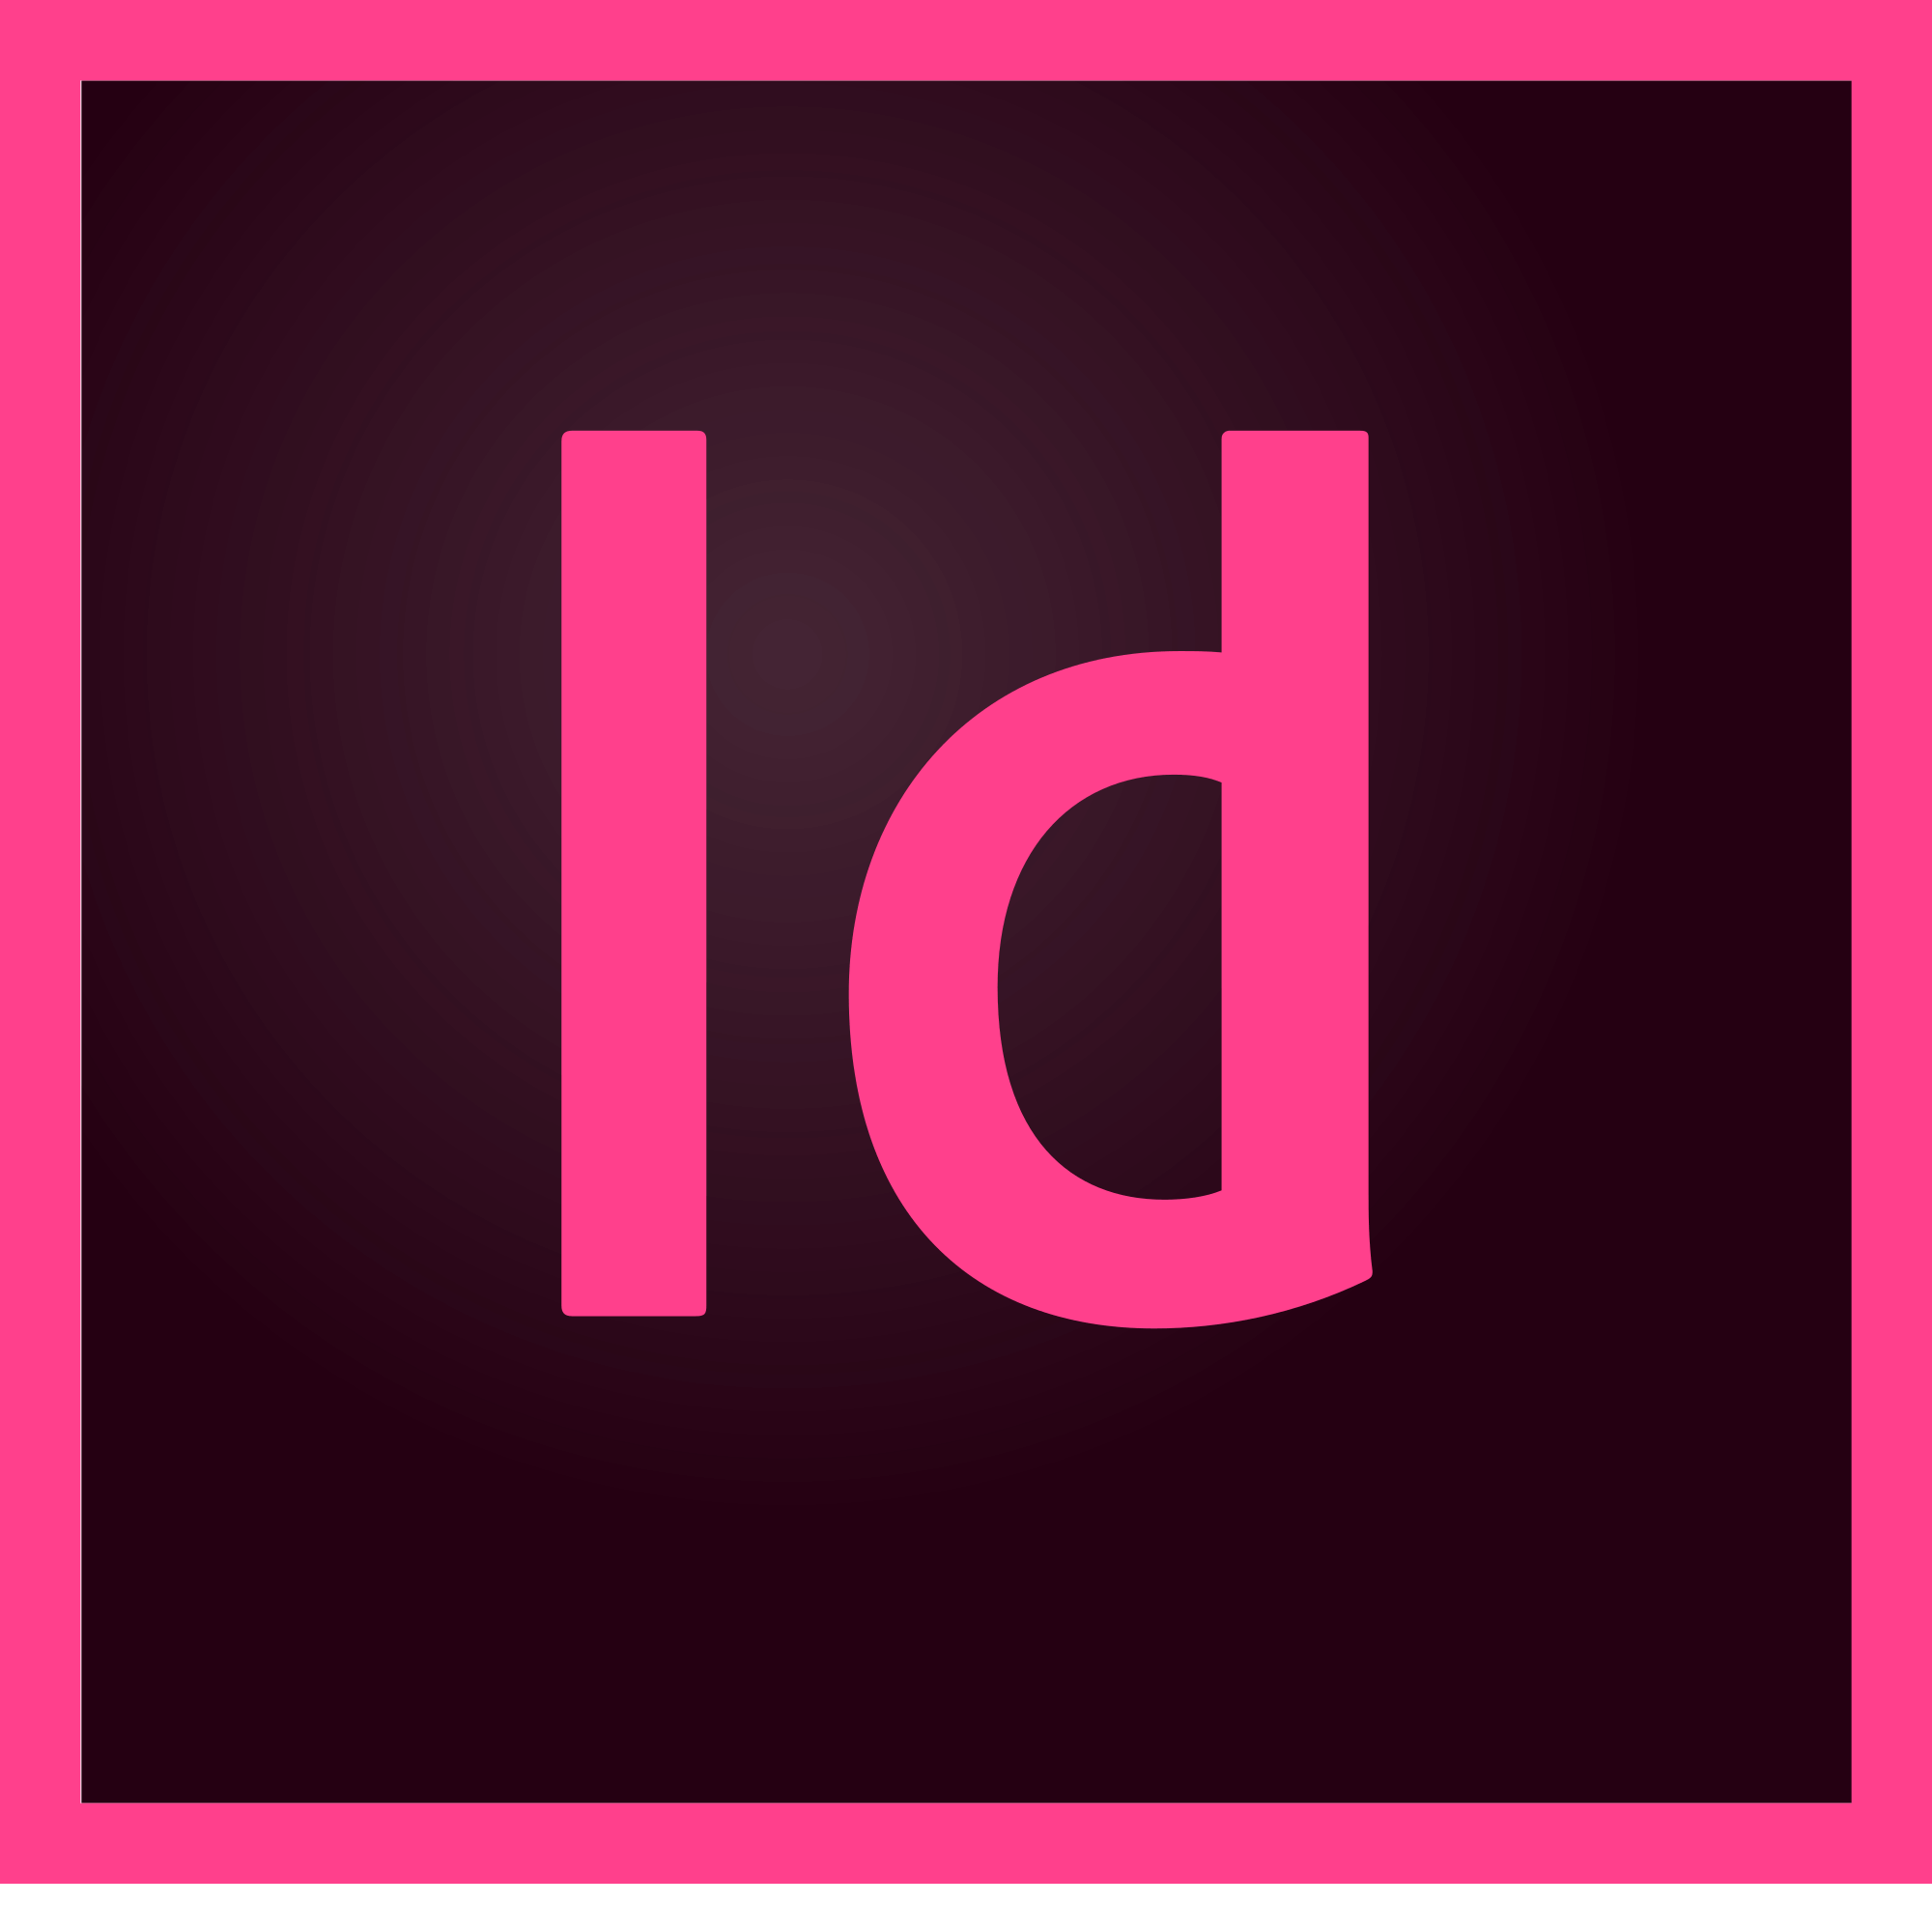 Adobe InDesign Logo - LogoDix